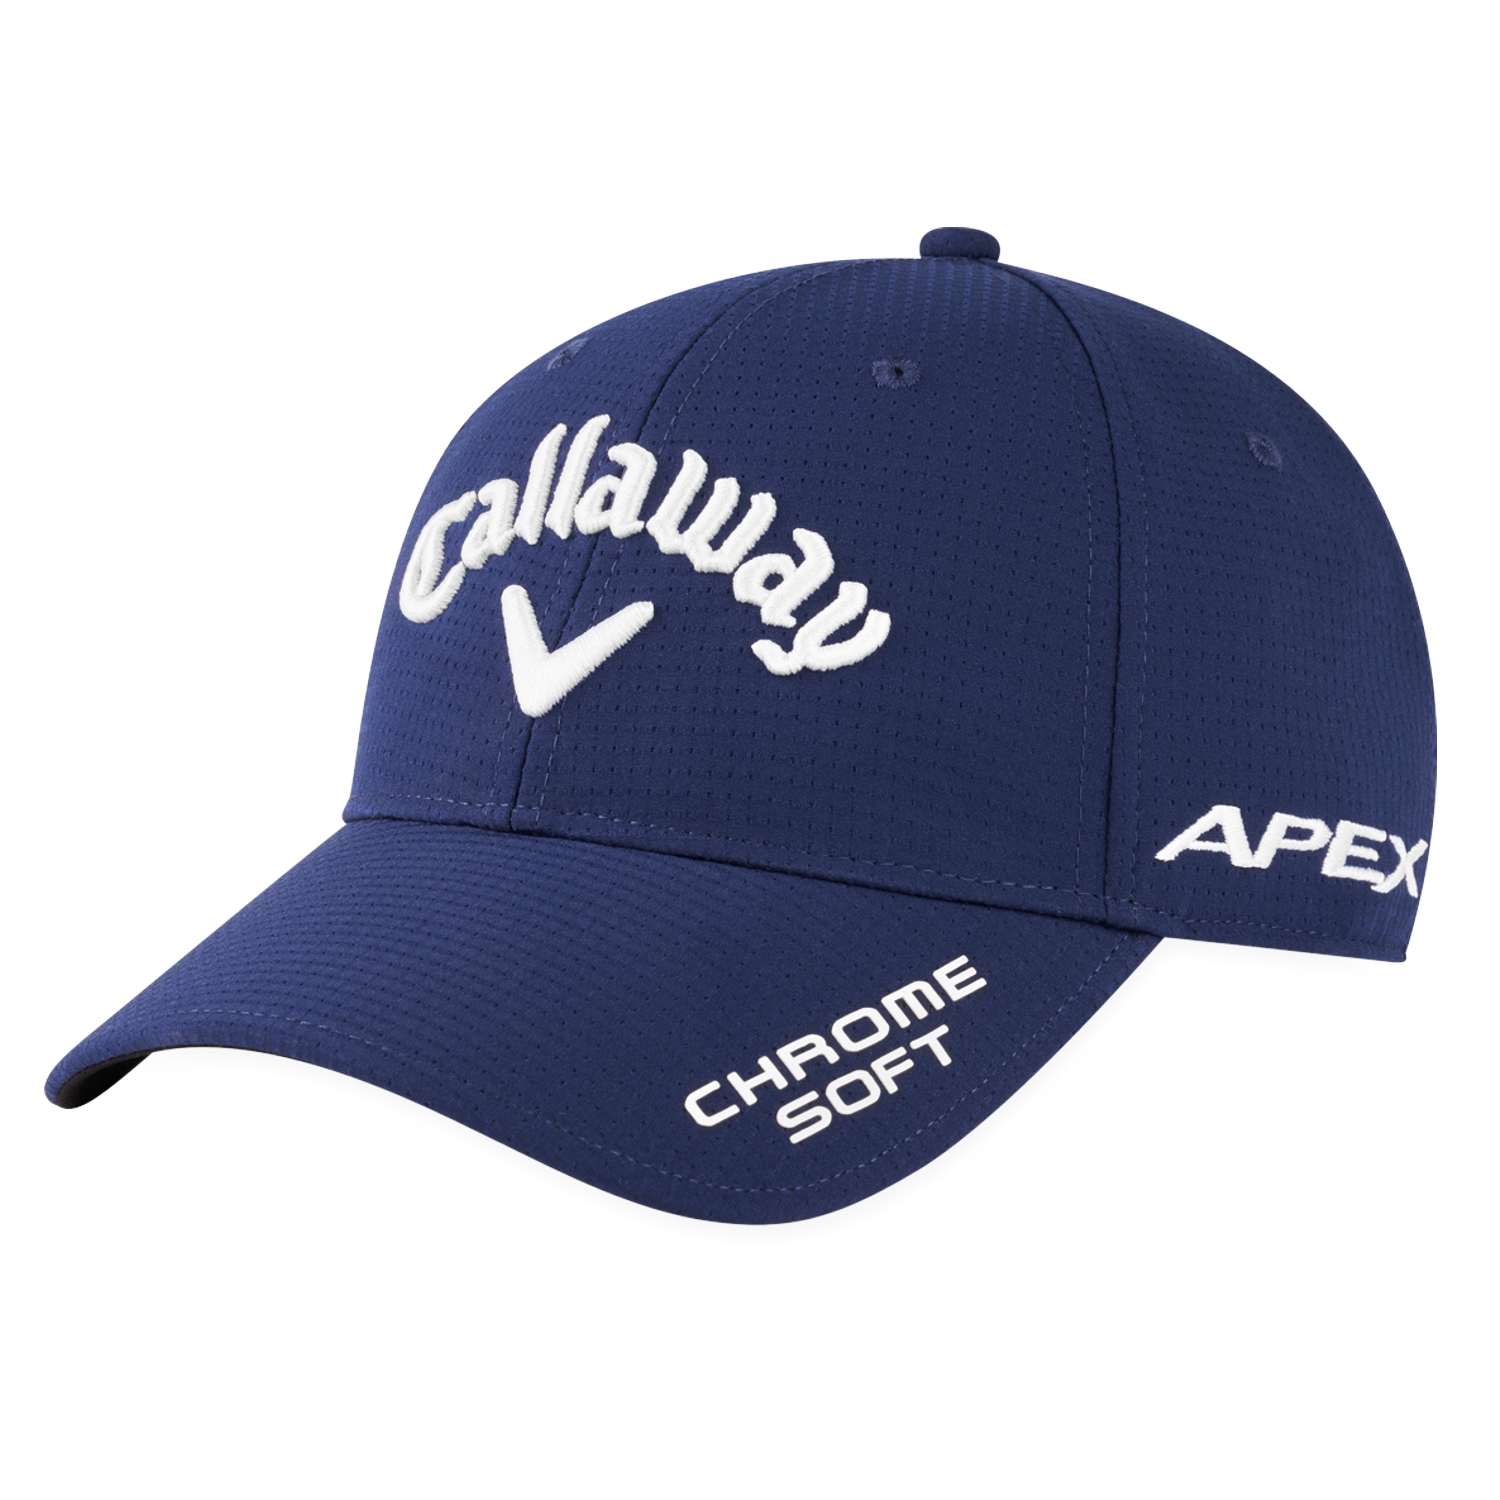 Callaway TA Performance Pro Golf Cap 2020 - ExpressGolf.co.uk